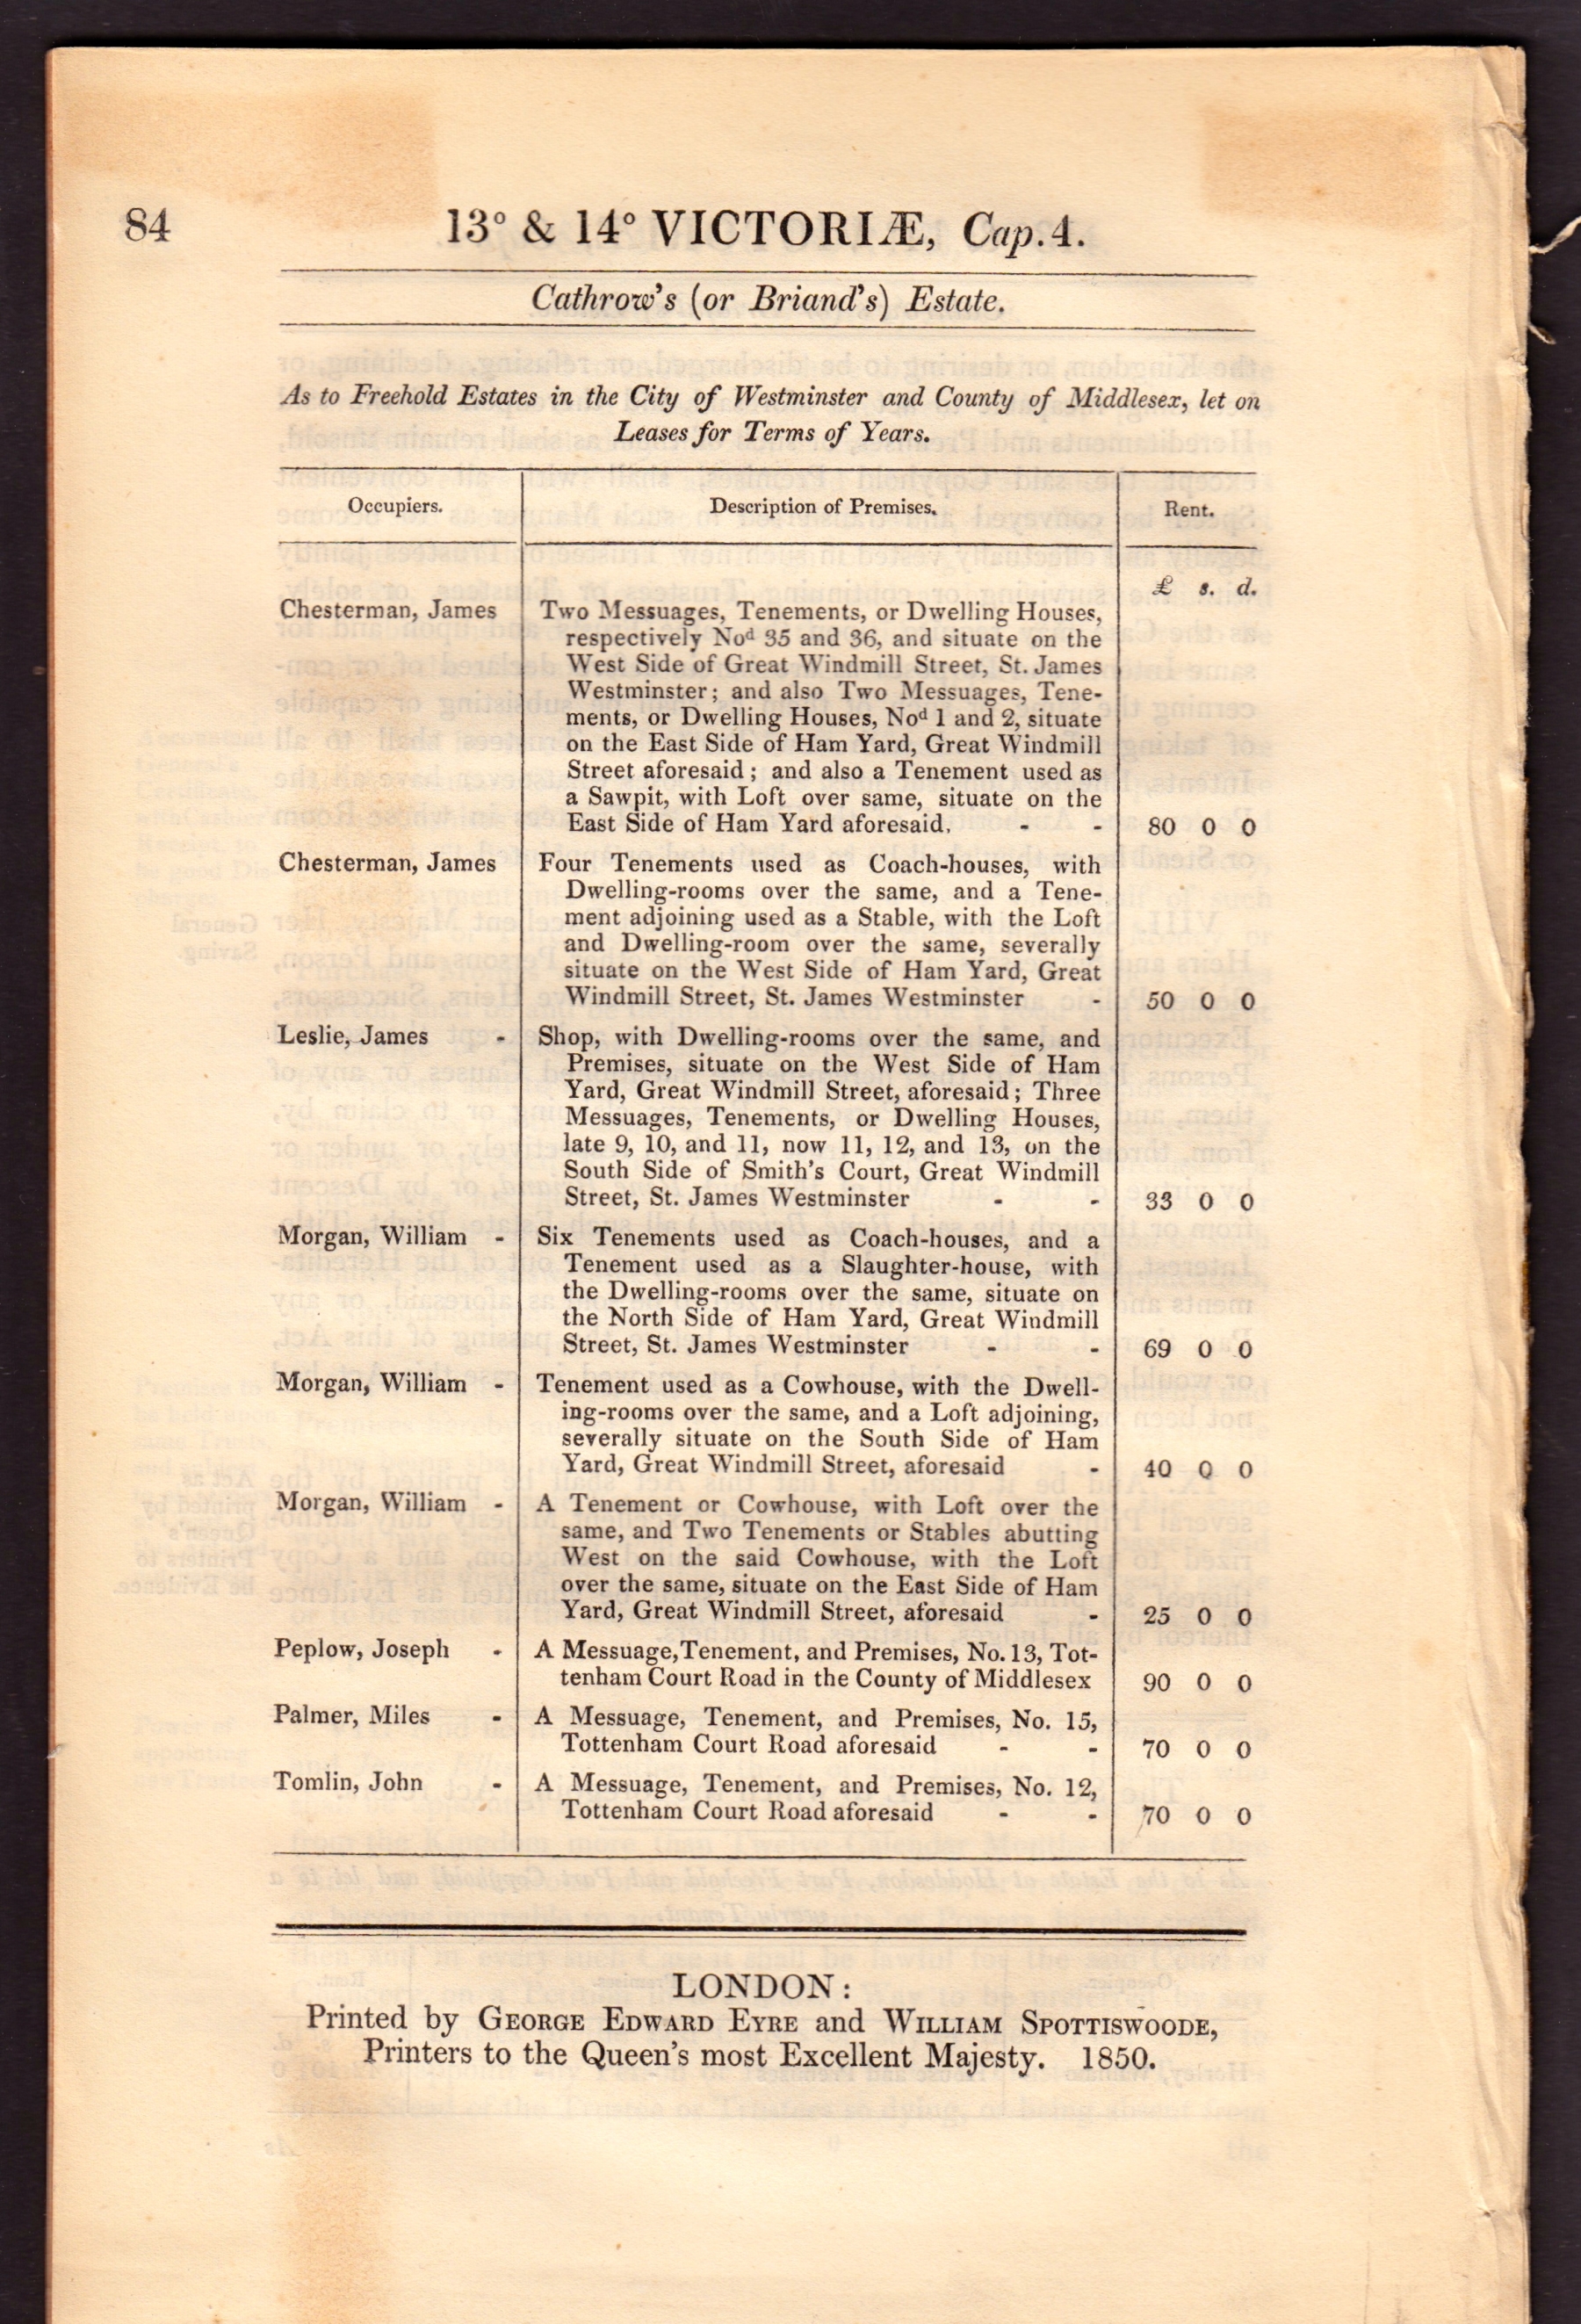 1850 Act. Sale of Estates in Hoddesdon etc.,